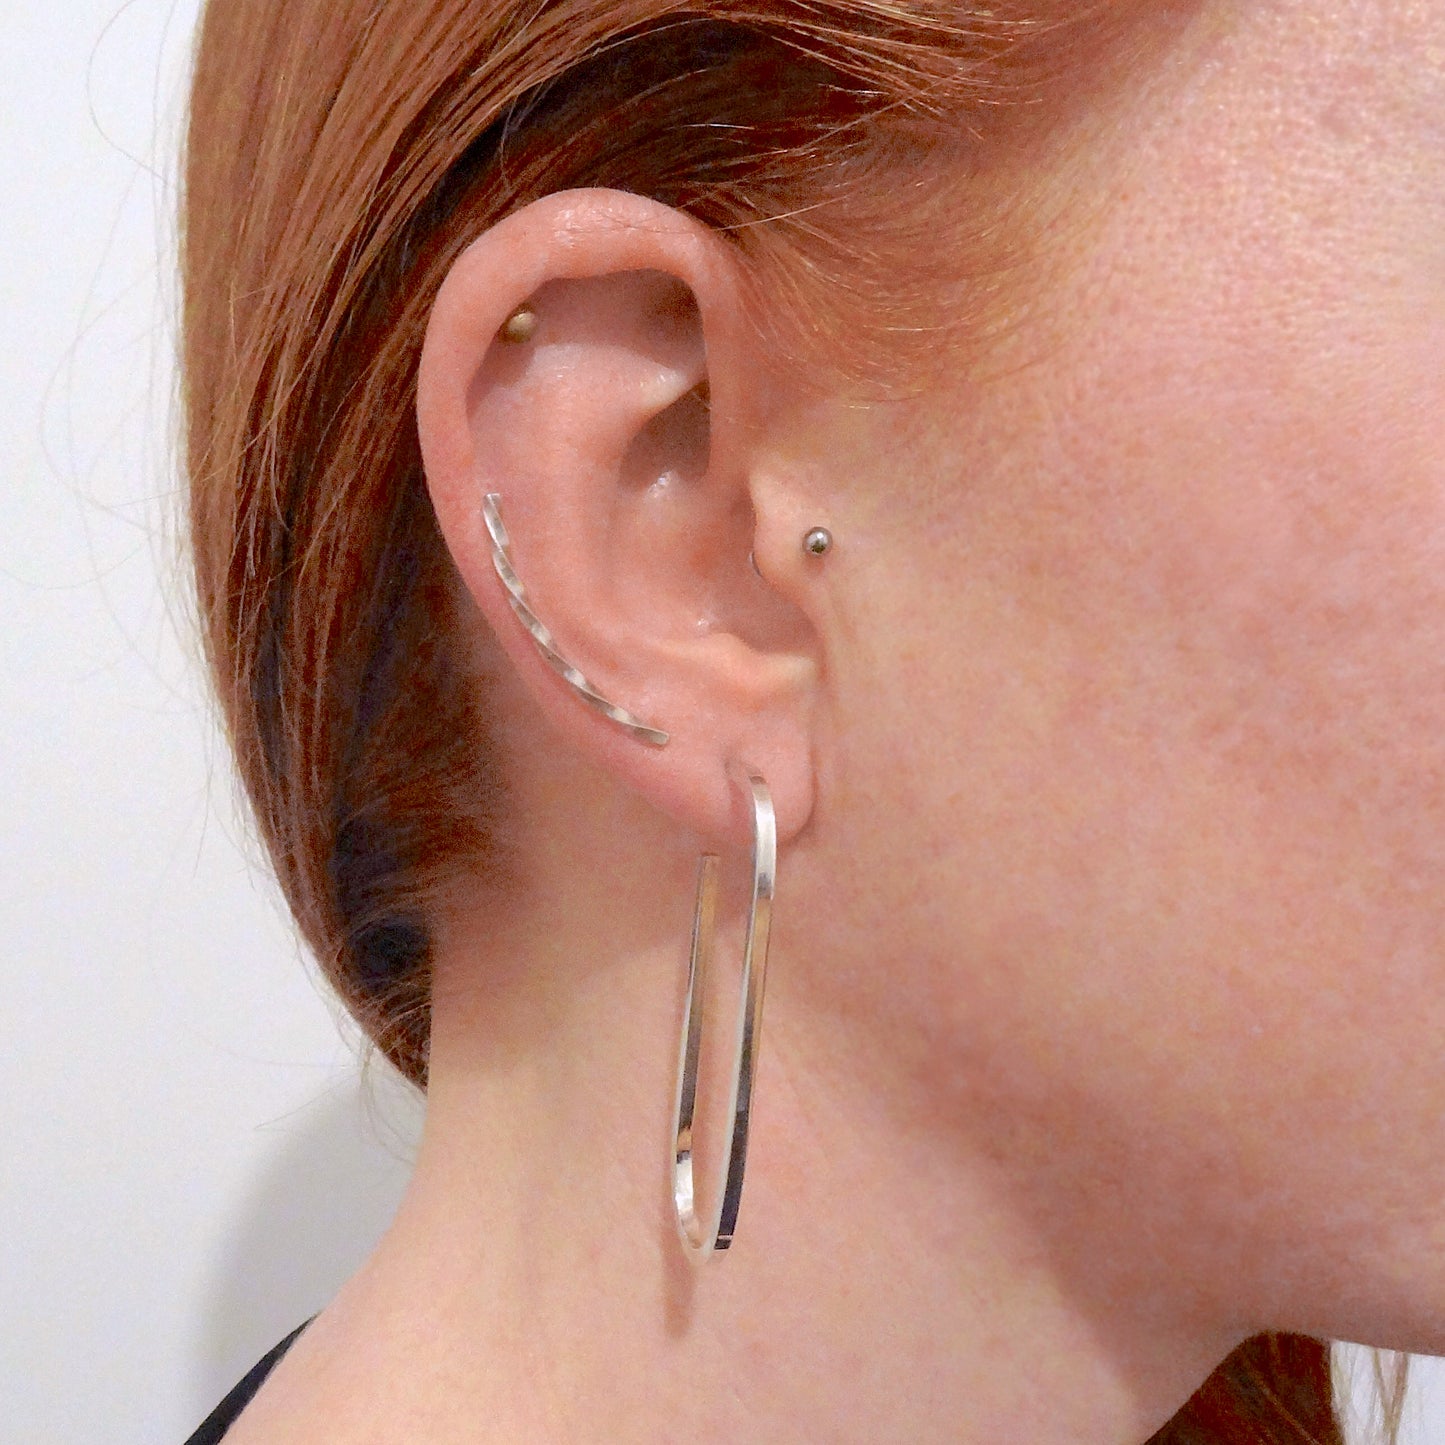 Agnes | long oval chain link earrings